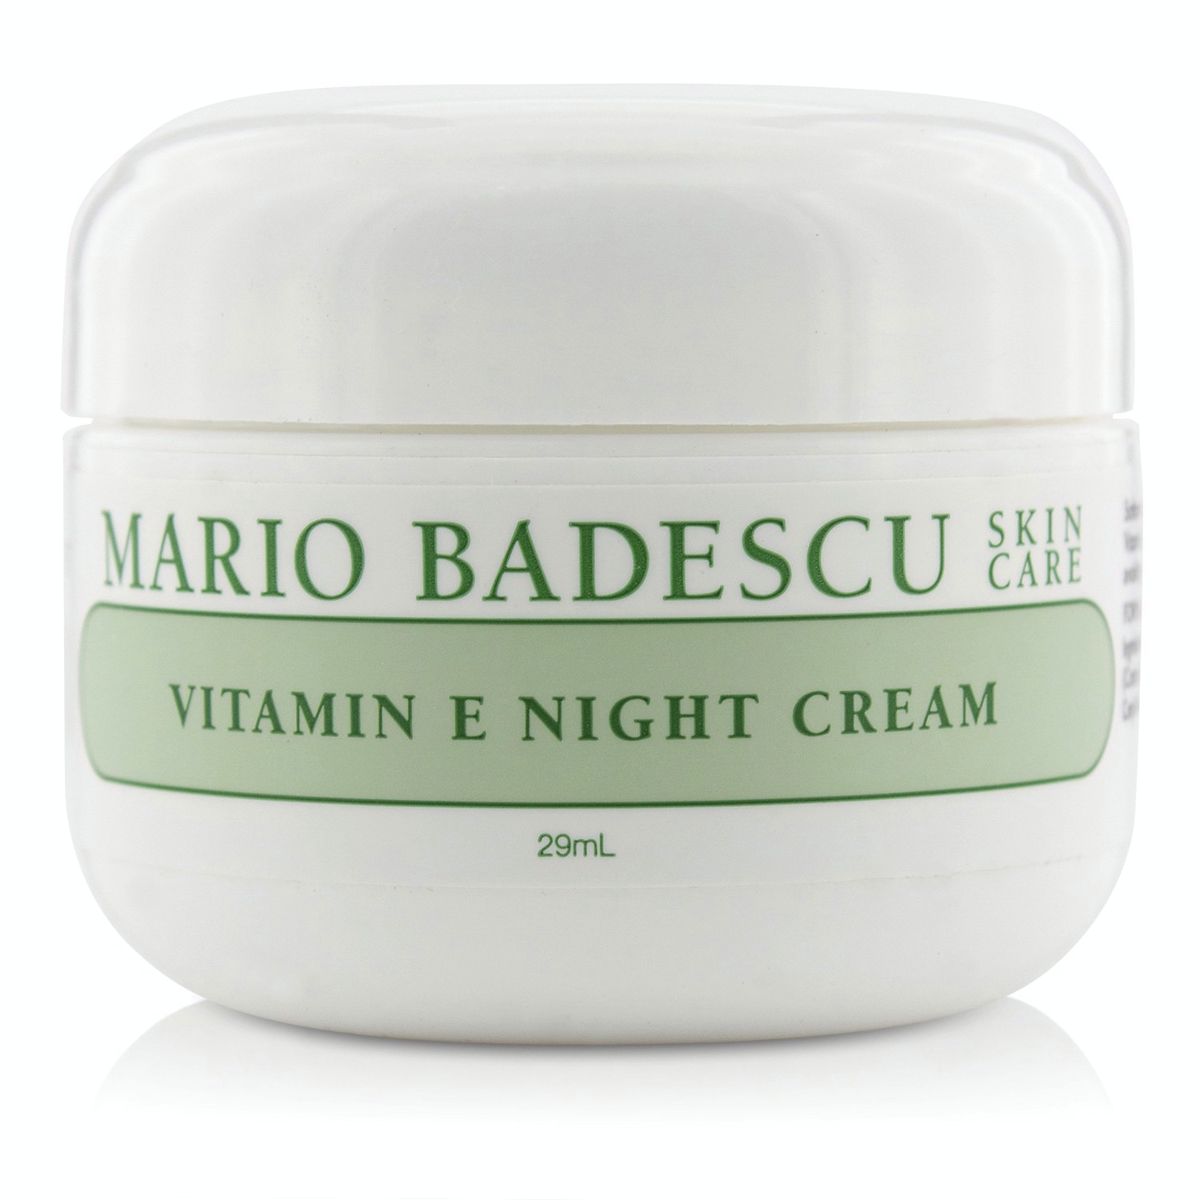 Vitamin E Night Cream - For Dry/ Sensitive Skin Types Mario Badescu Image